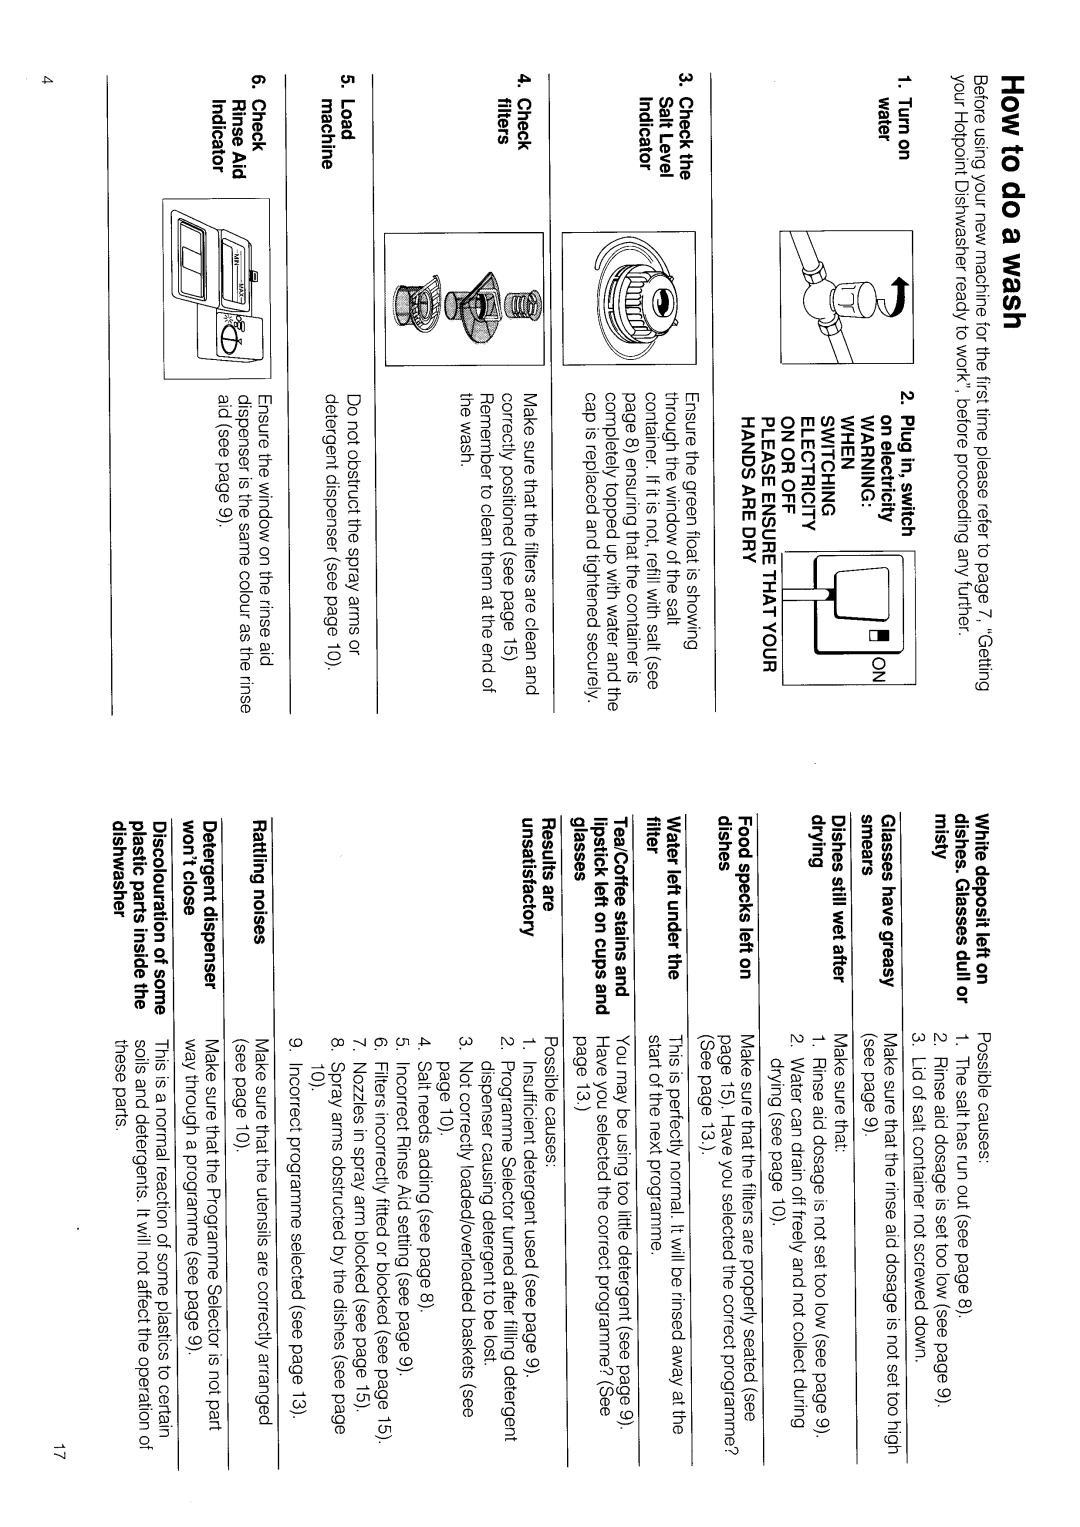 Hotpoint 7834 manual 